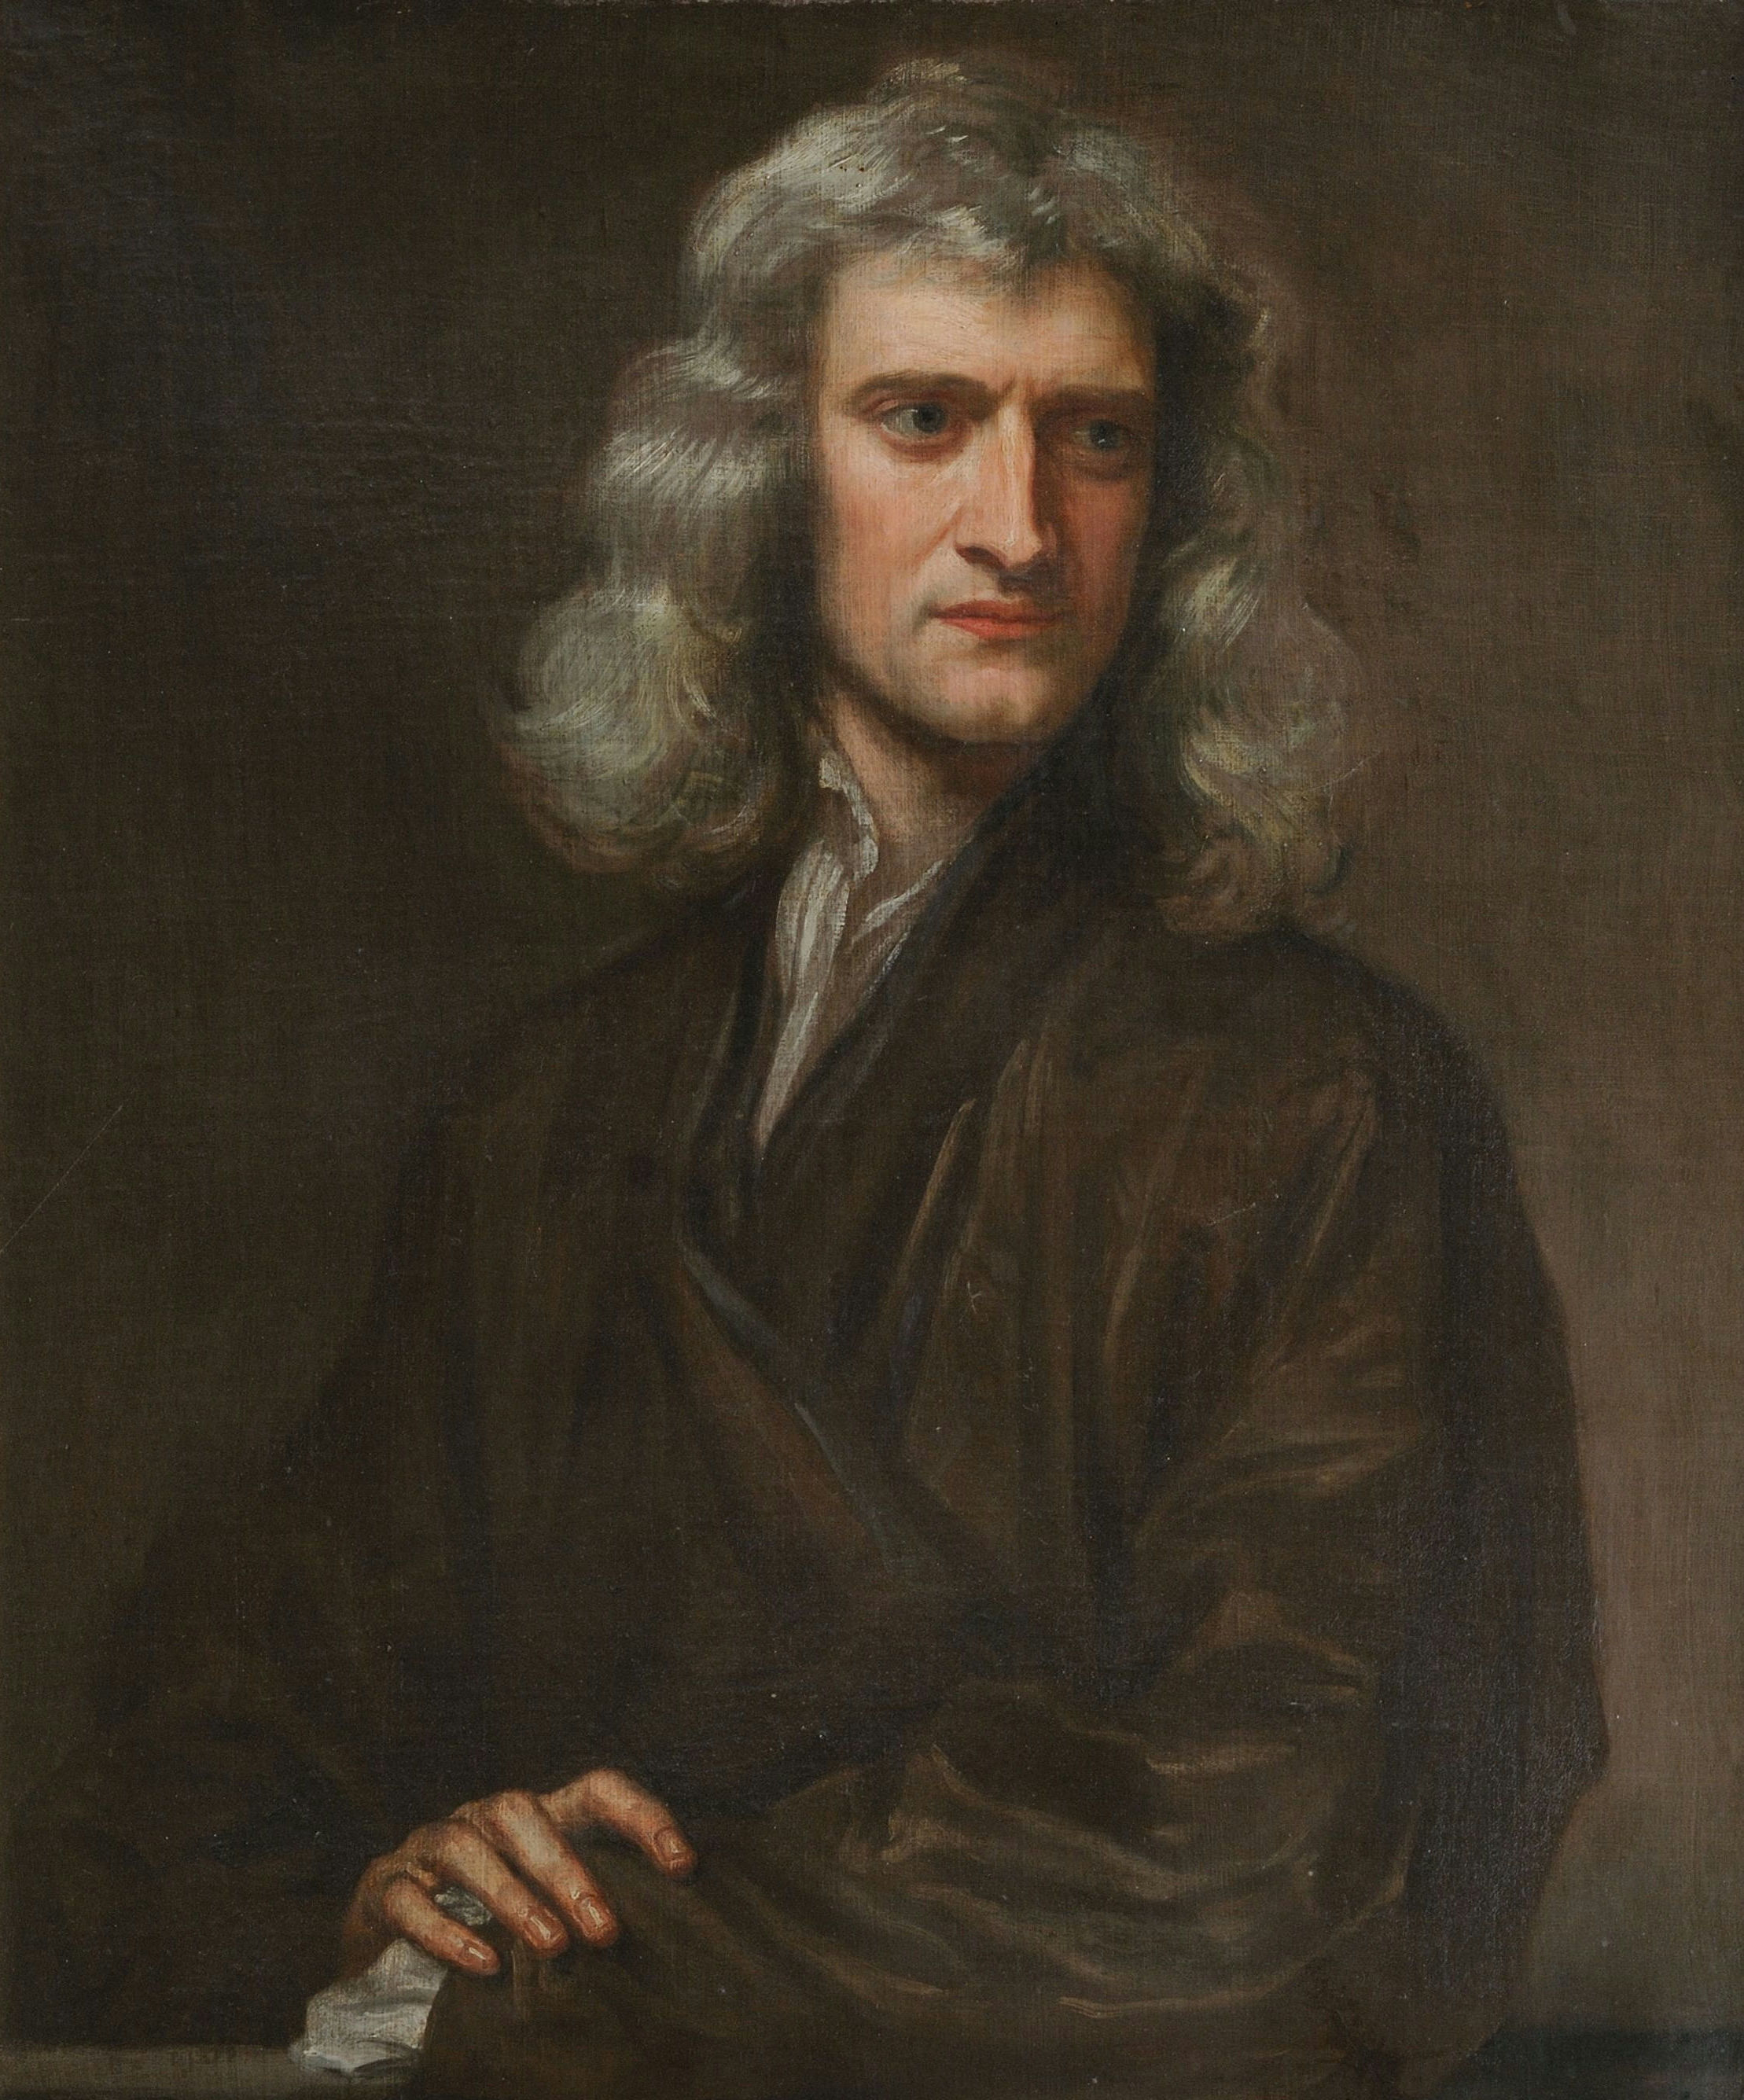 Portrait_of_Sir_Isaac_Newton,_1689.jpg